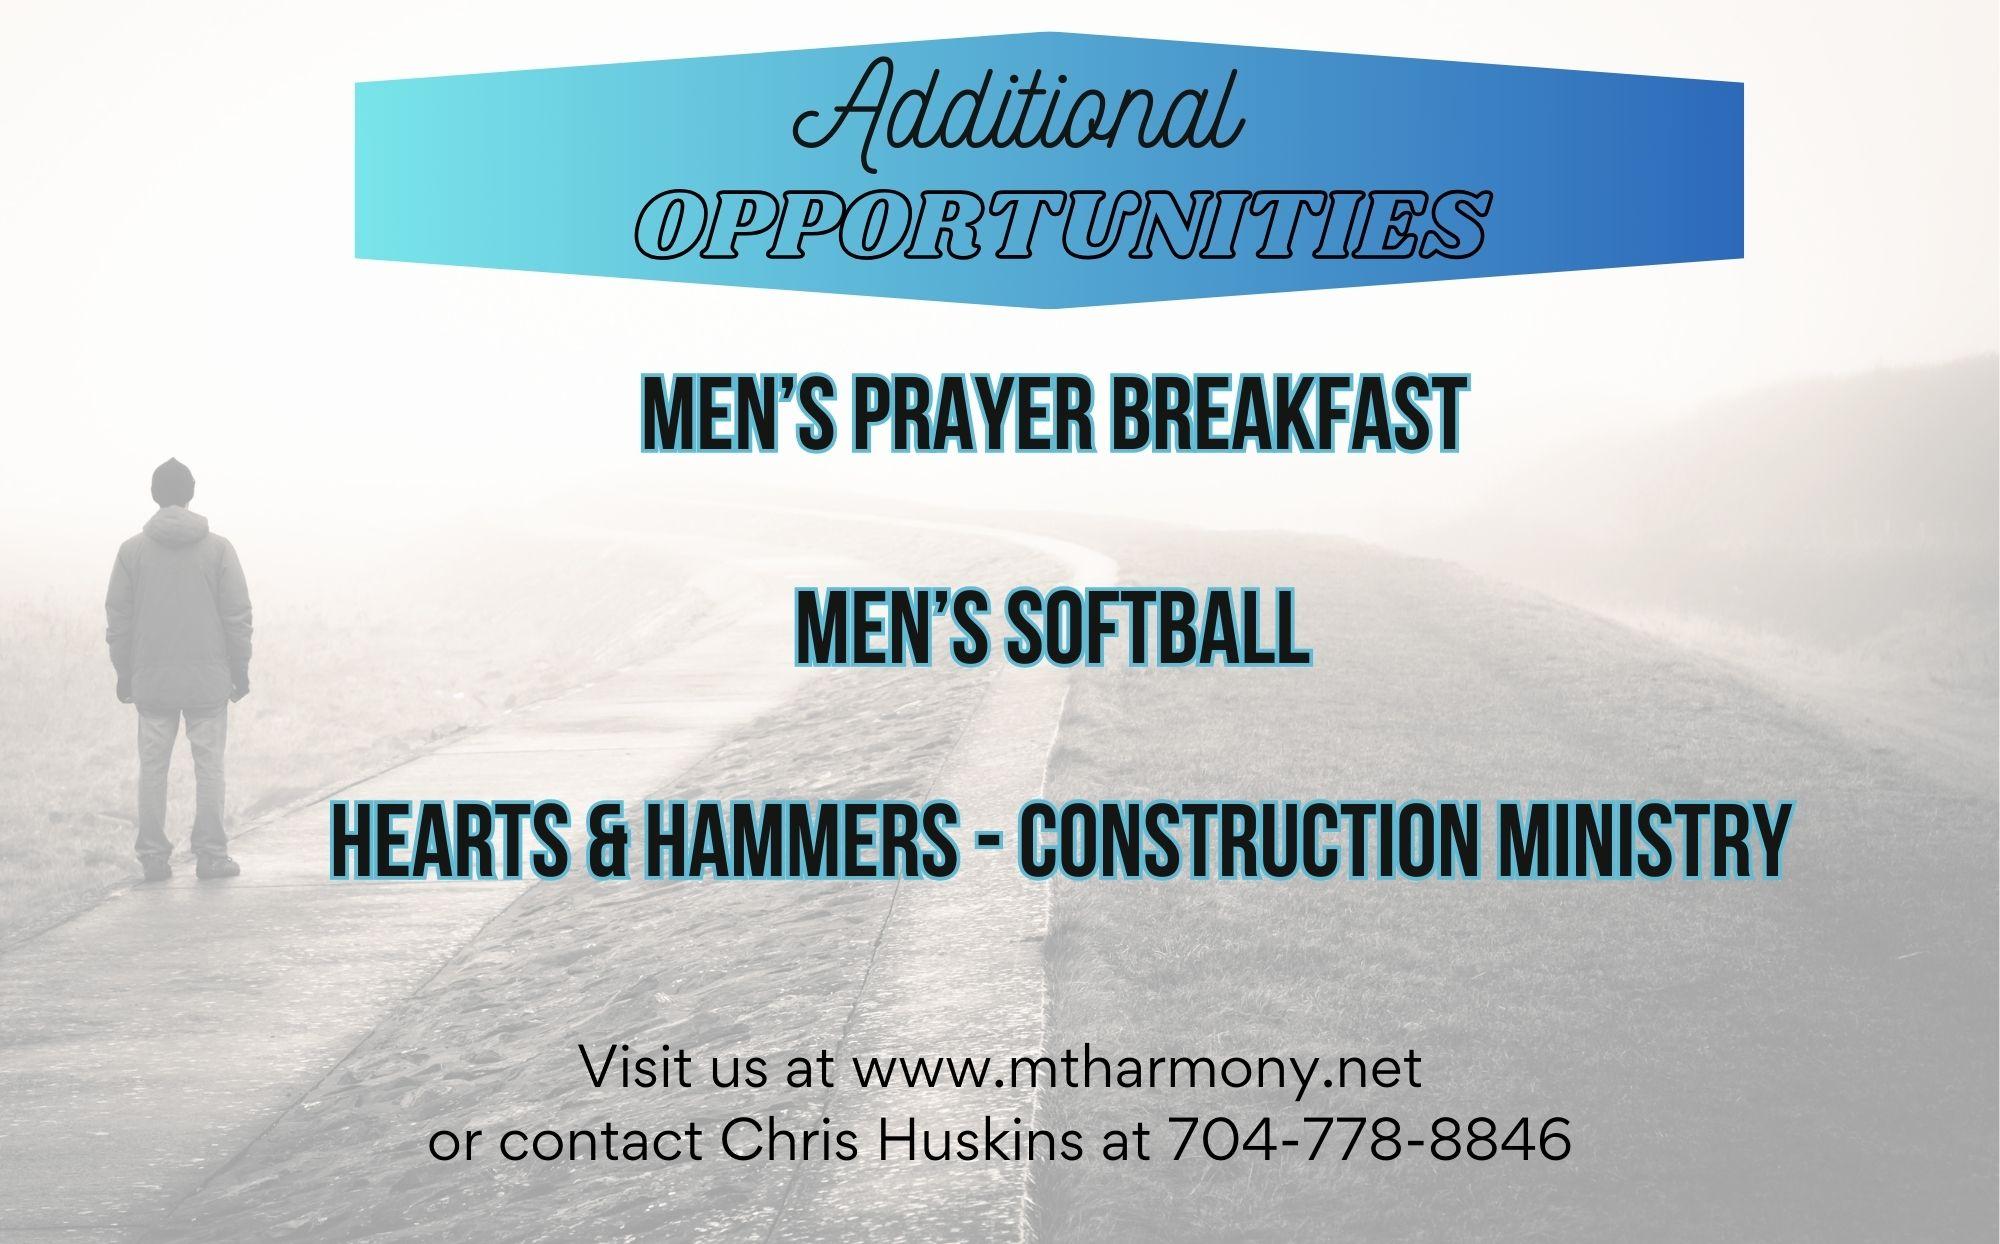 Other Men's Menistry activities include: Men's Prayer Breakfast, Men's Softball, & Hearts & Hammers (a construction ministry).